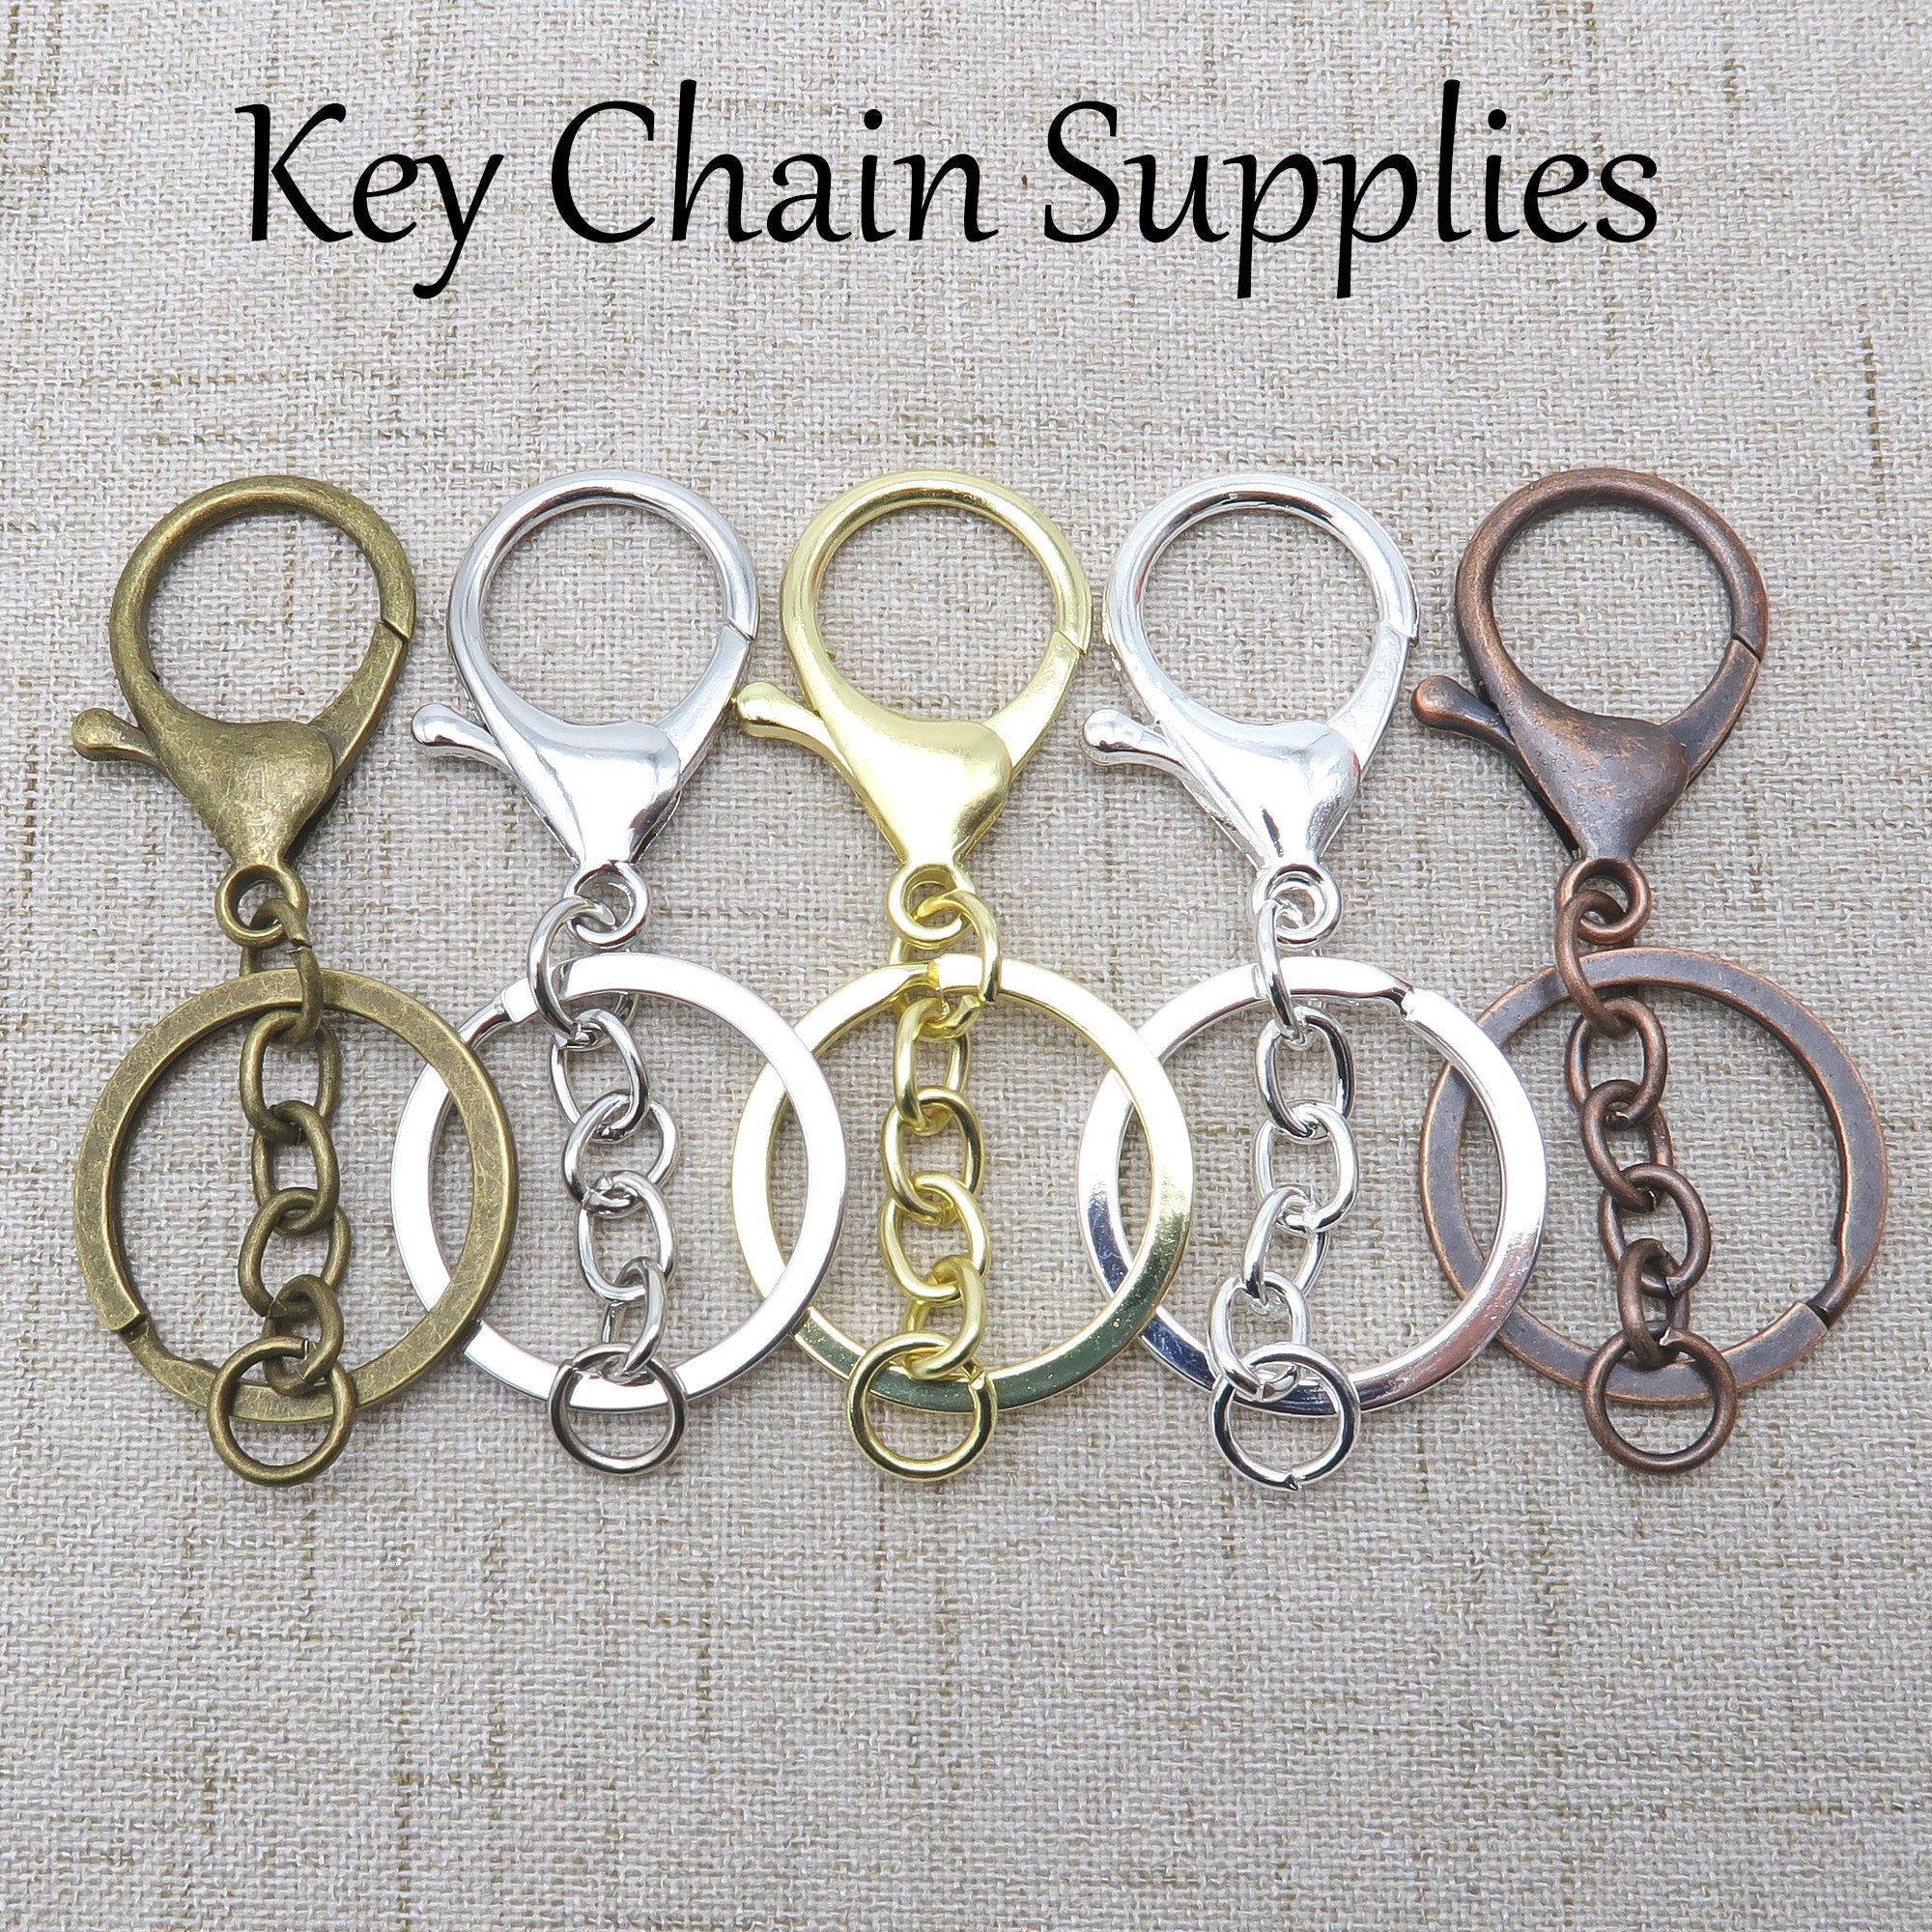 10pcs Bulk Keychain Supplies, Keychain Keyring With Chain Jump